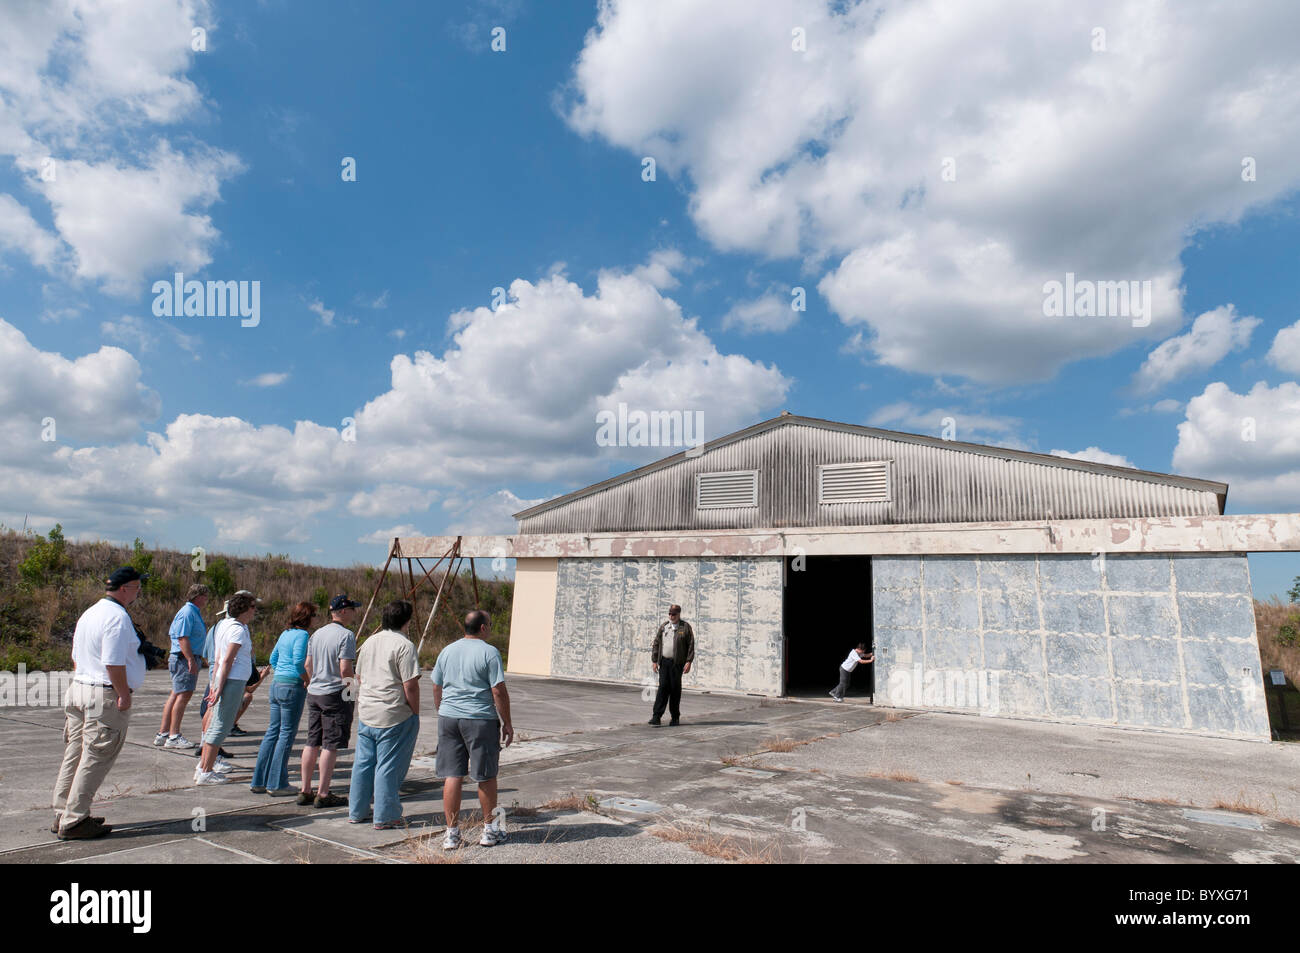 Park ranger leads tour of Nike Hercules Missile barn at Cuban Missile Crisis era site, Everglades National Park, Florida Stock Photo